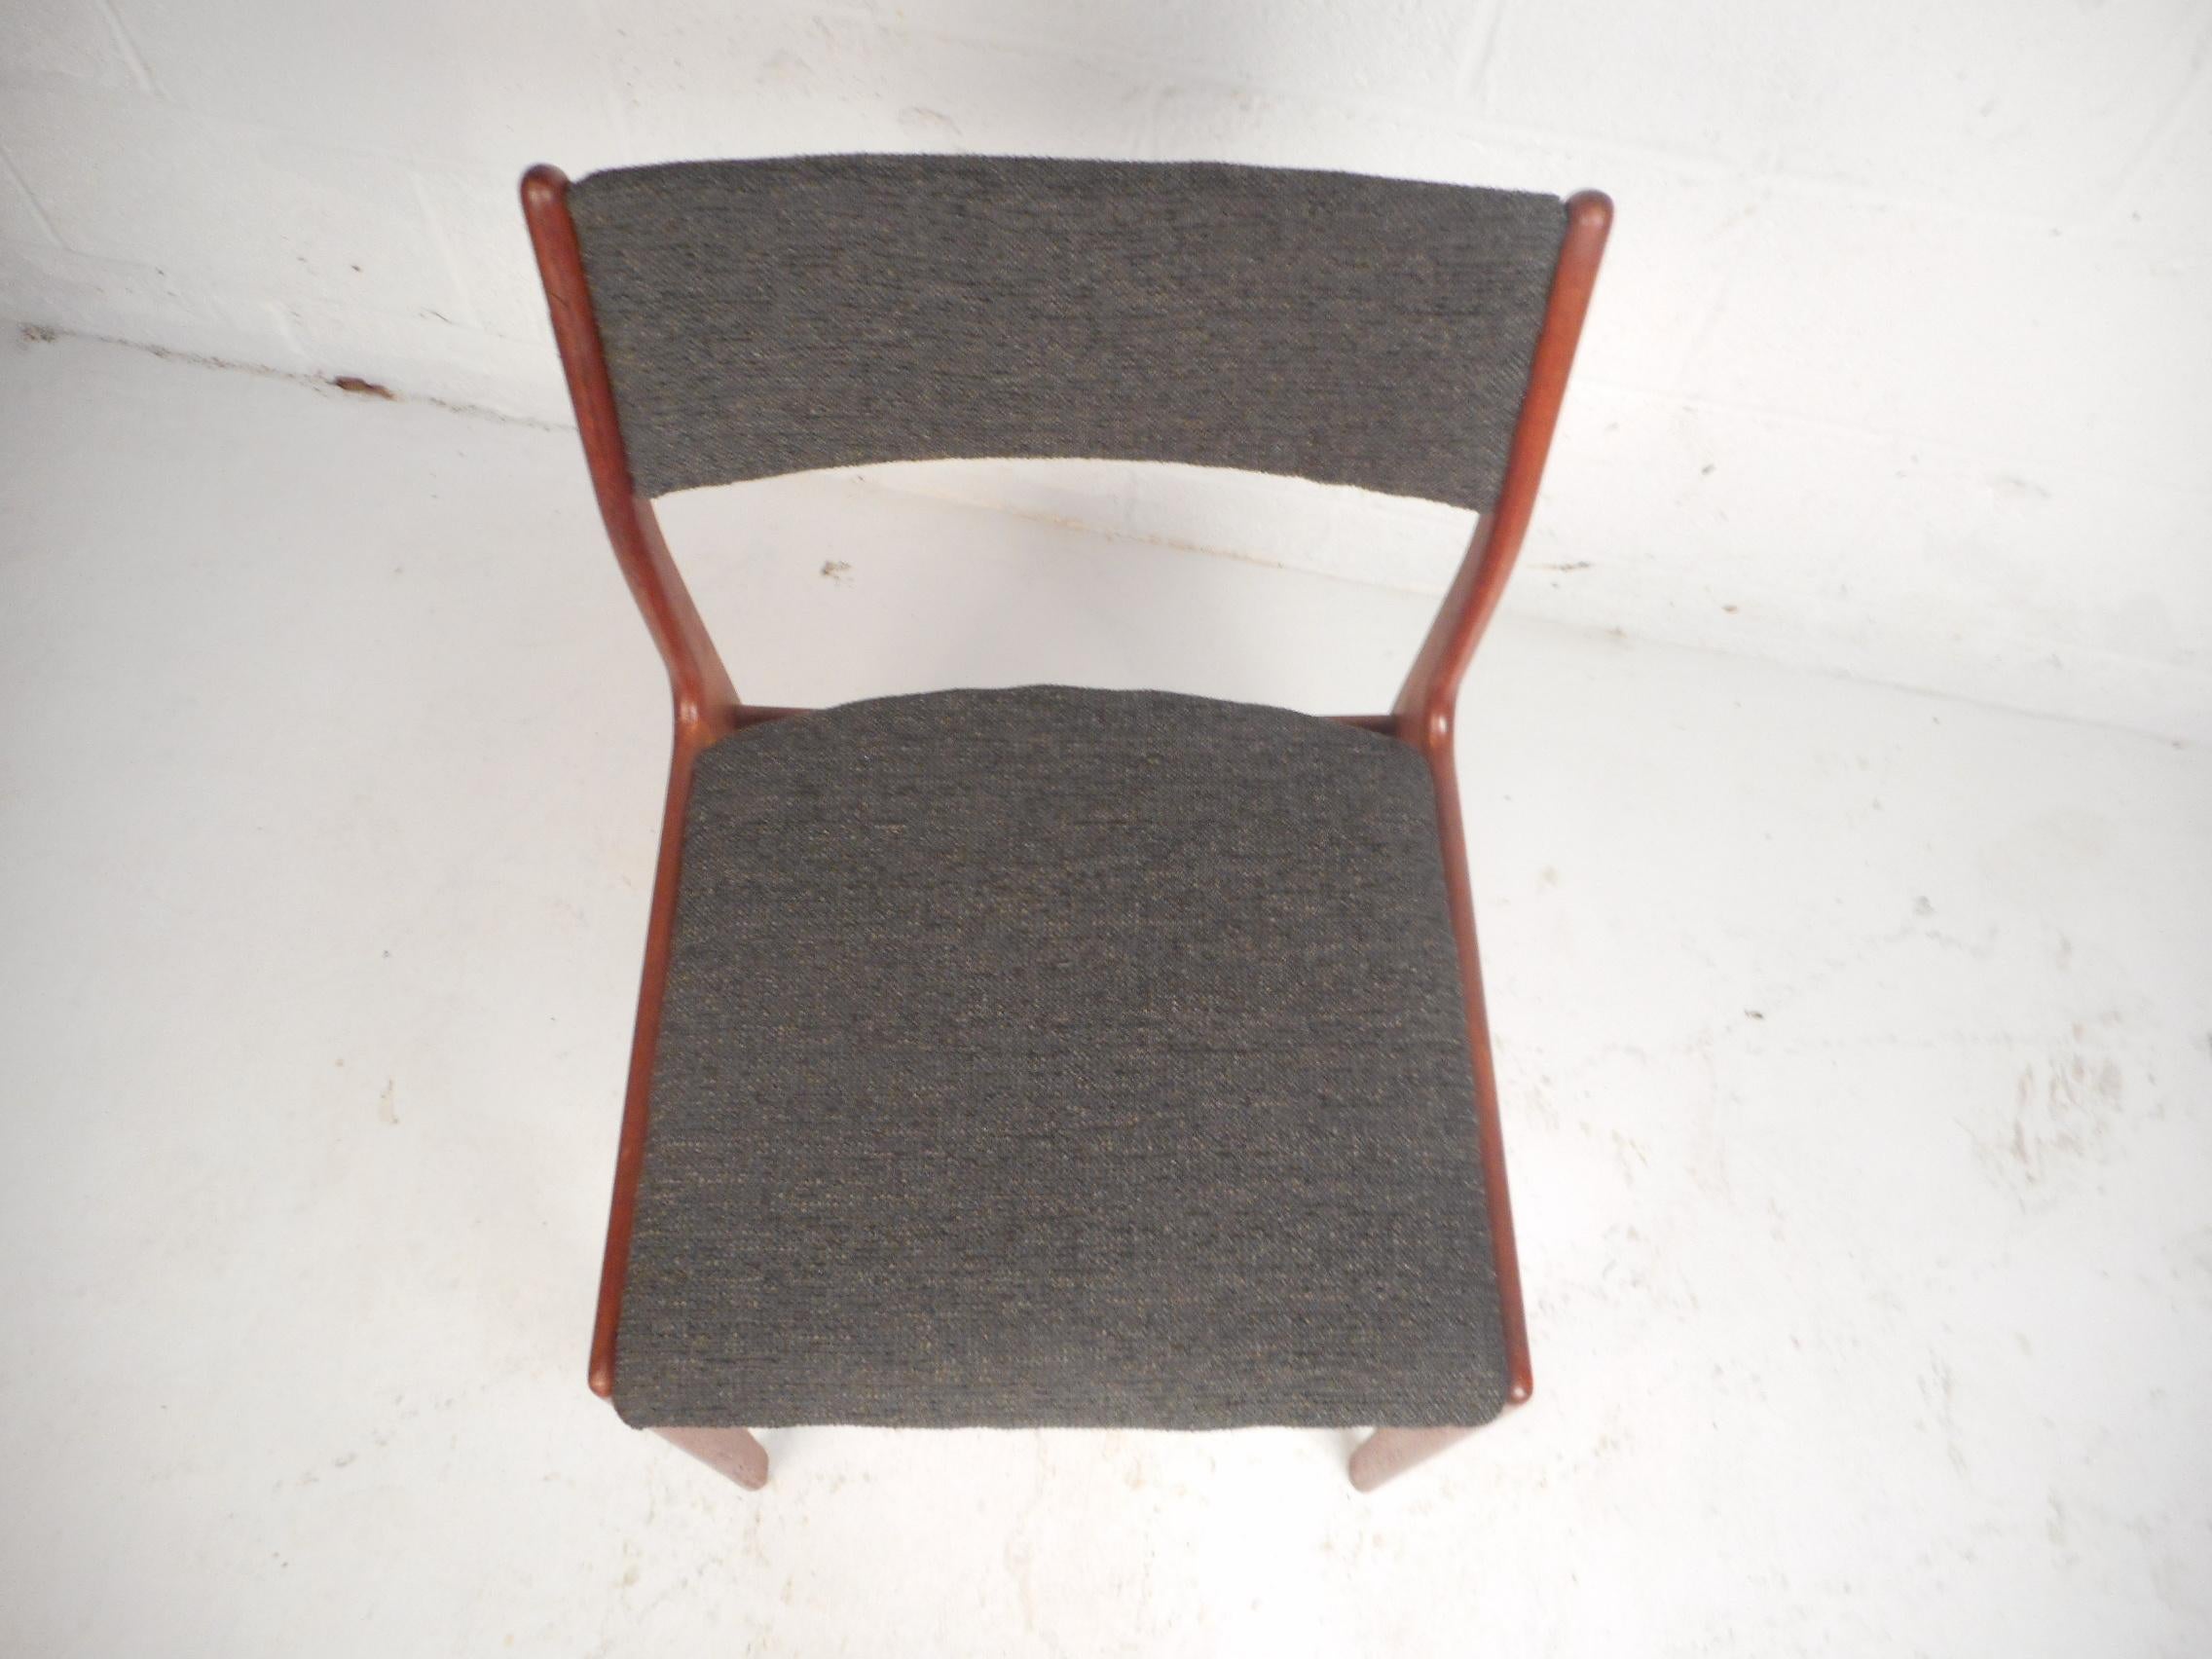 mid century modern danish teak dining chairs